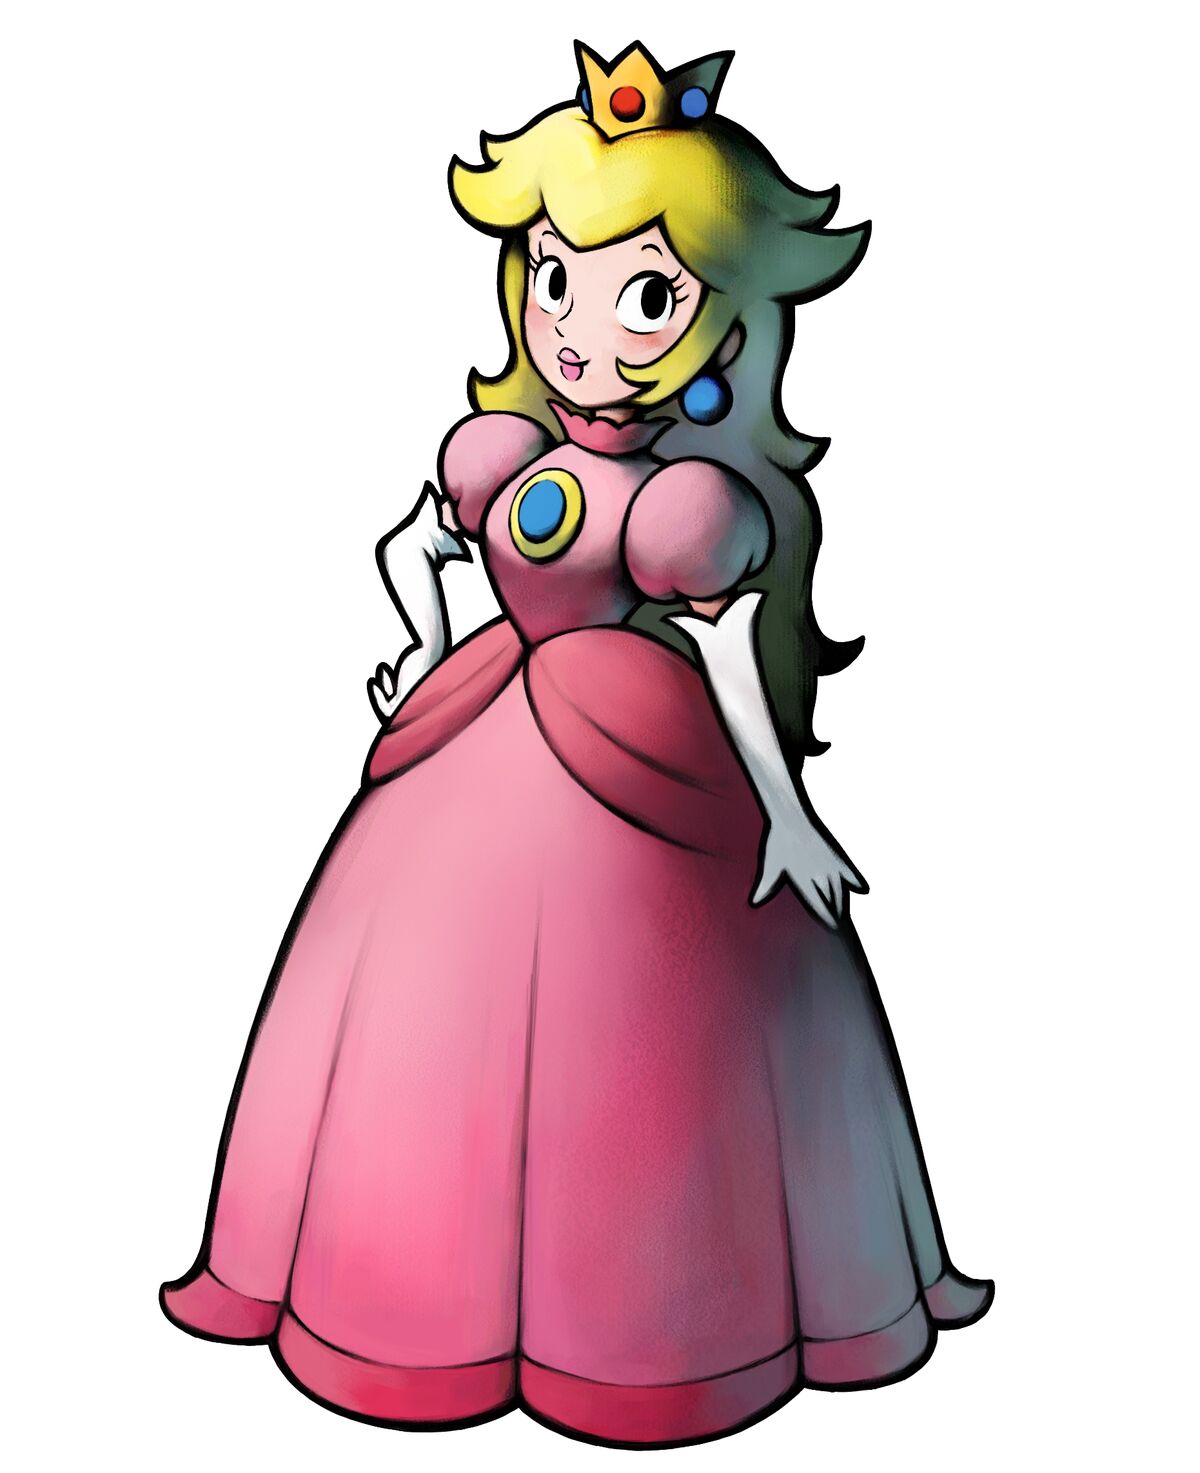 Princess Peach - Wikipedia